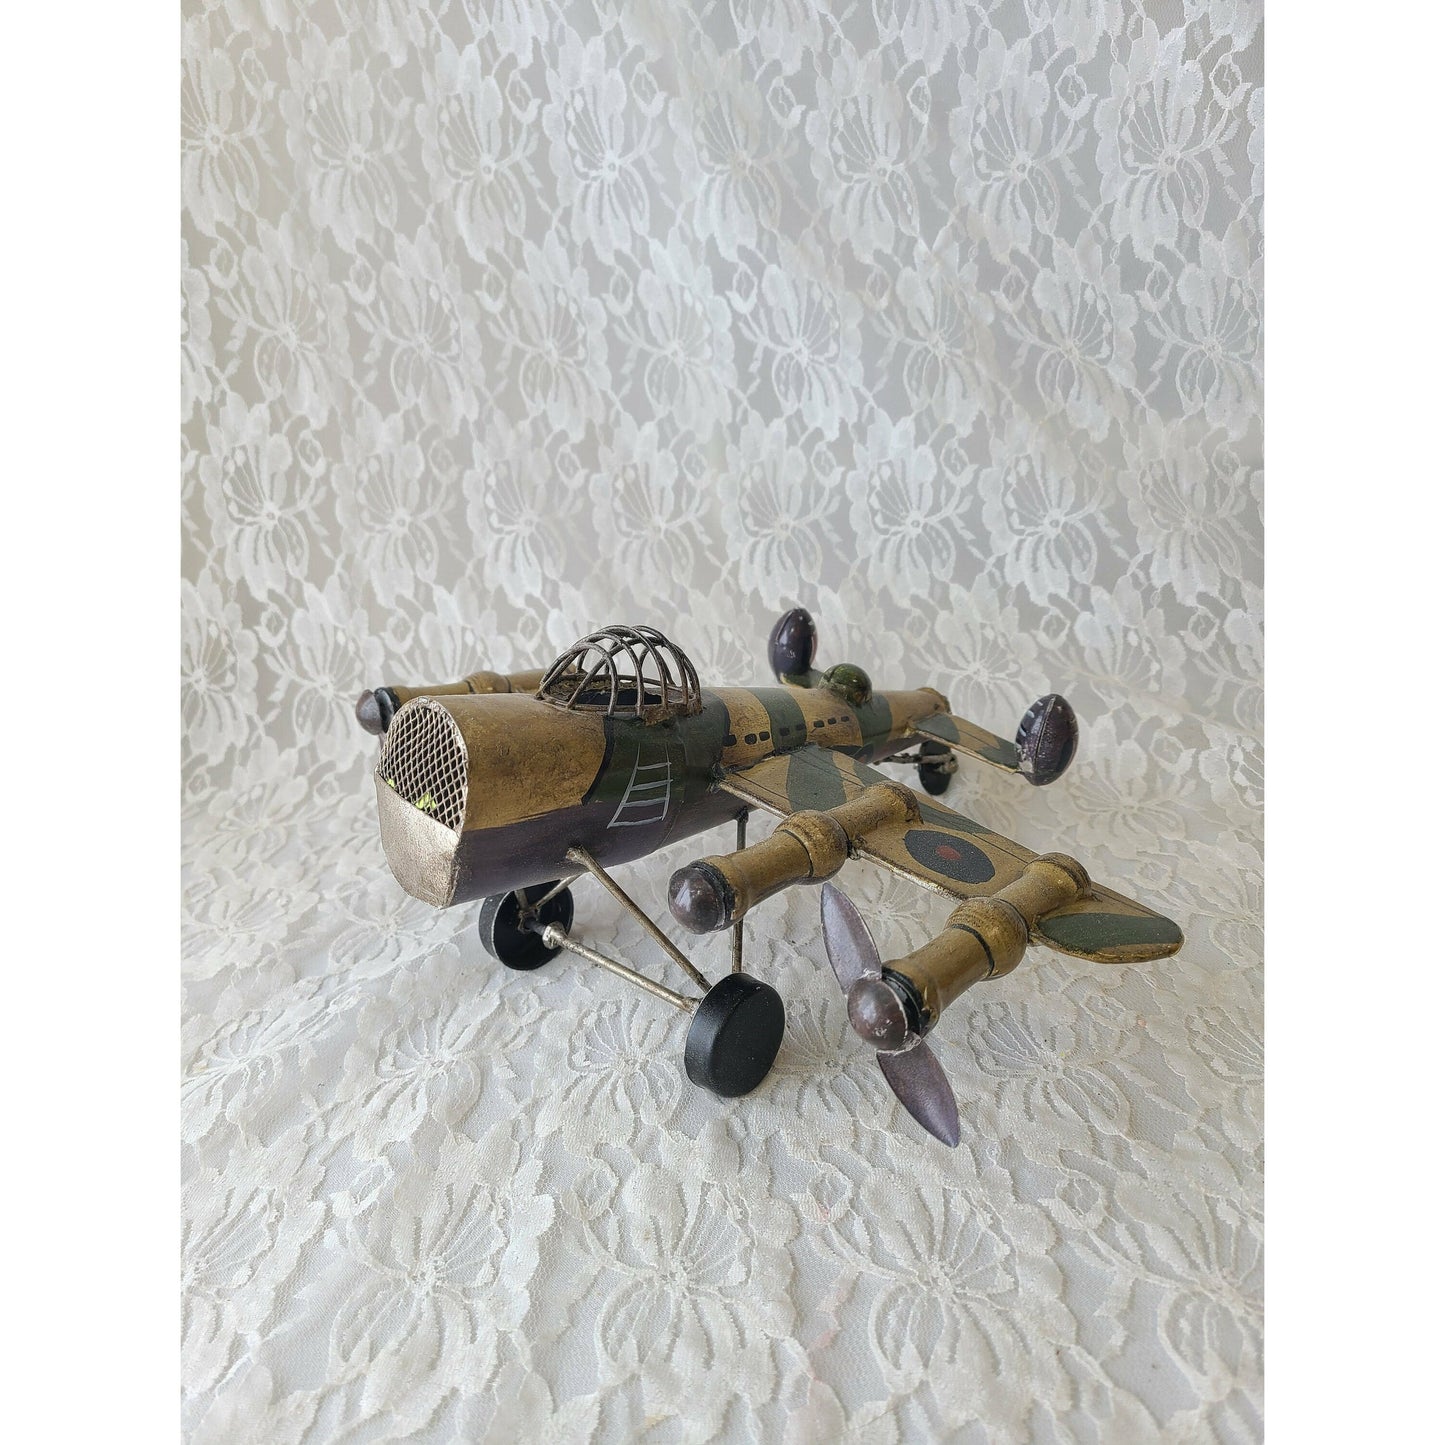 Vintage Metal Folk Art Airplane ~ WW2 Fighter Bomber ~ Free-Standing ~ Handmade ~ Gift for a Pilot or Veteran ~ Gift for Grandpa